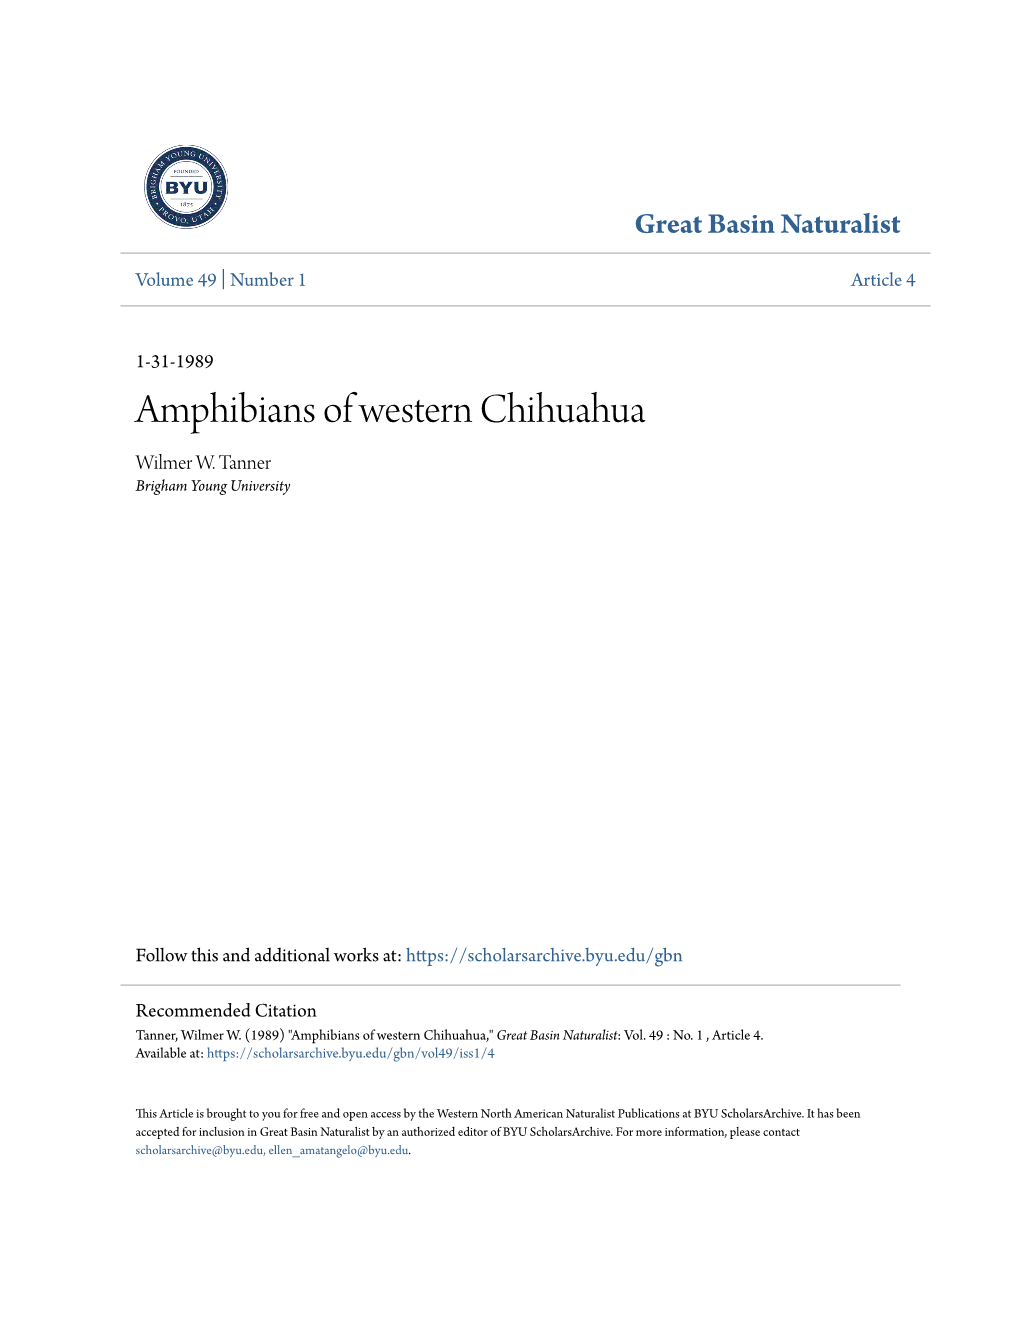 Amphibians of Western Chihuahua Wilmer W